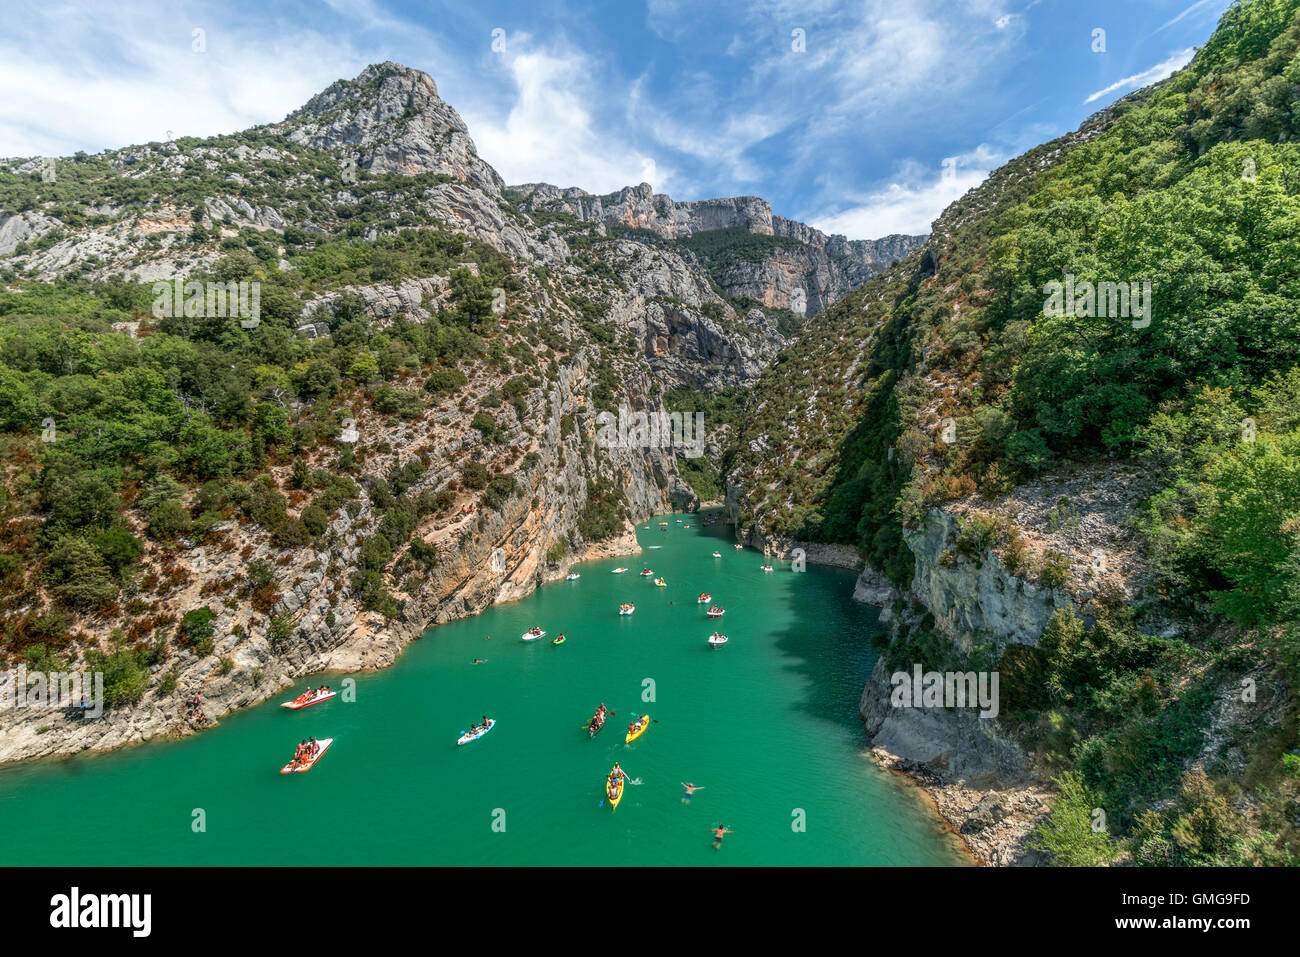 Wassersport in den Gorges du Verdon, Peddleboats, Kanu, Alpes-de-Haute-Provence, Provence-Alpes-Côte d ' Azur, Frankreich Verdon Regio Stockfoto